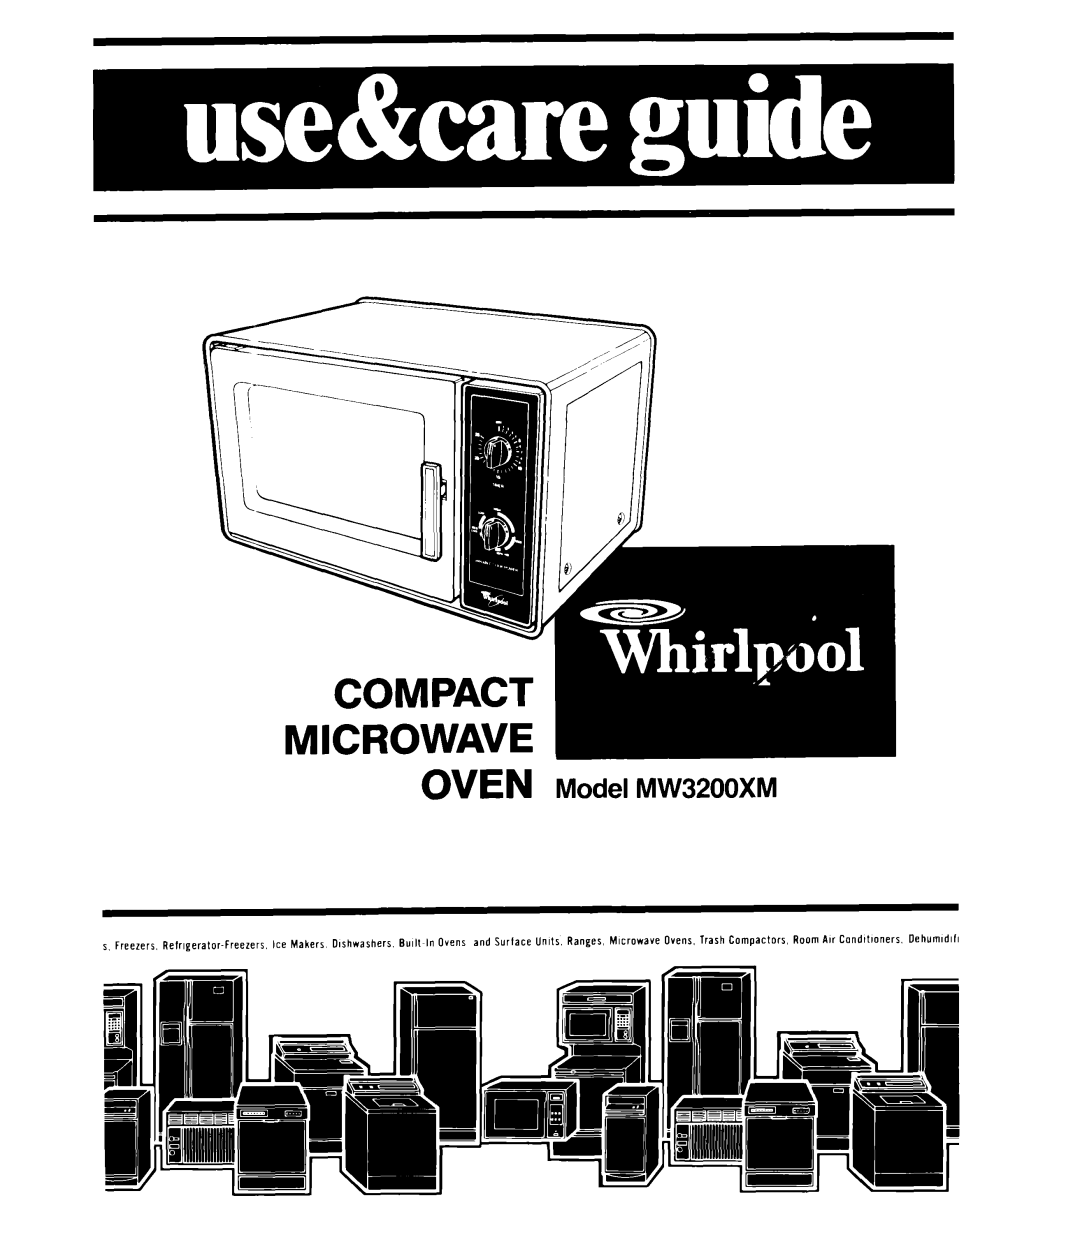 Whirlpool manual Microwave, OVEN Model MW3200XM 